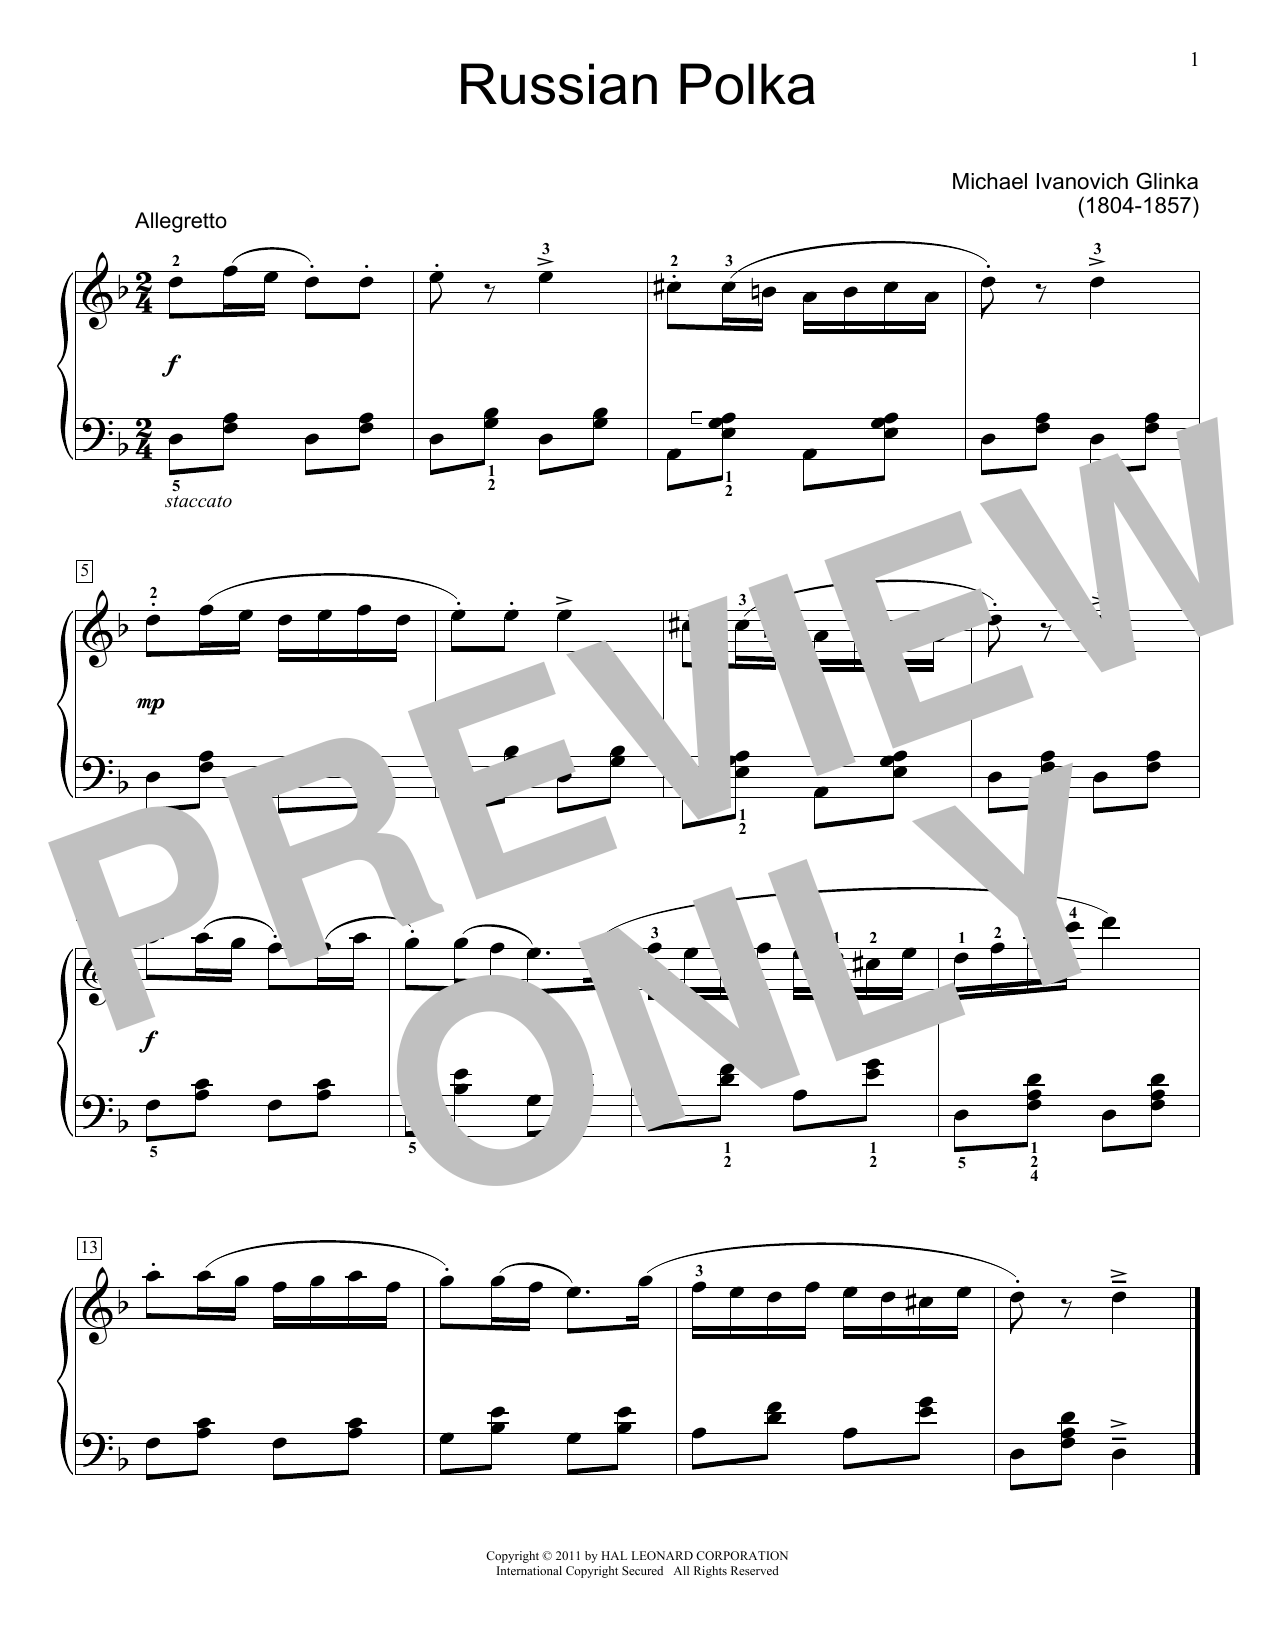 Mikhail Glinka Russian Polka Sheet Music Notes & Chords for Beginner Piano - Download or Print PDF